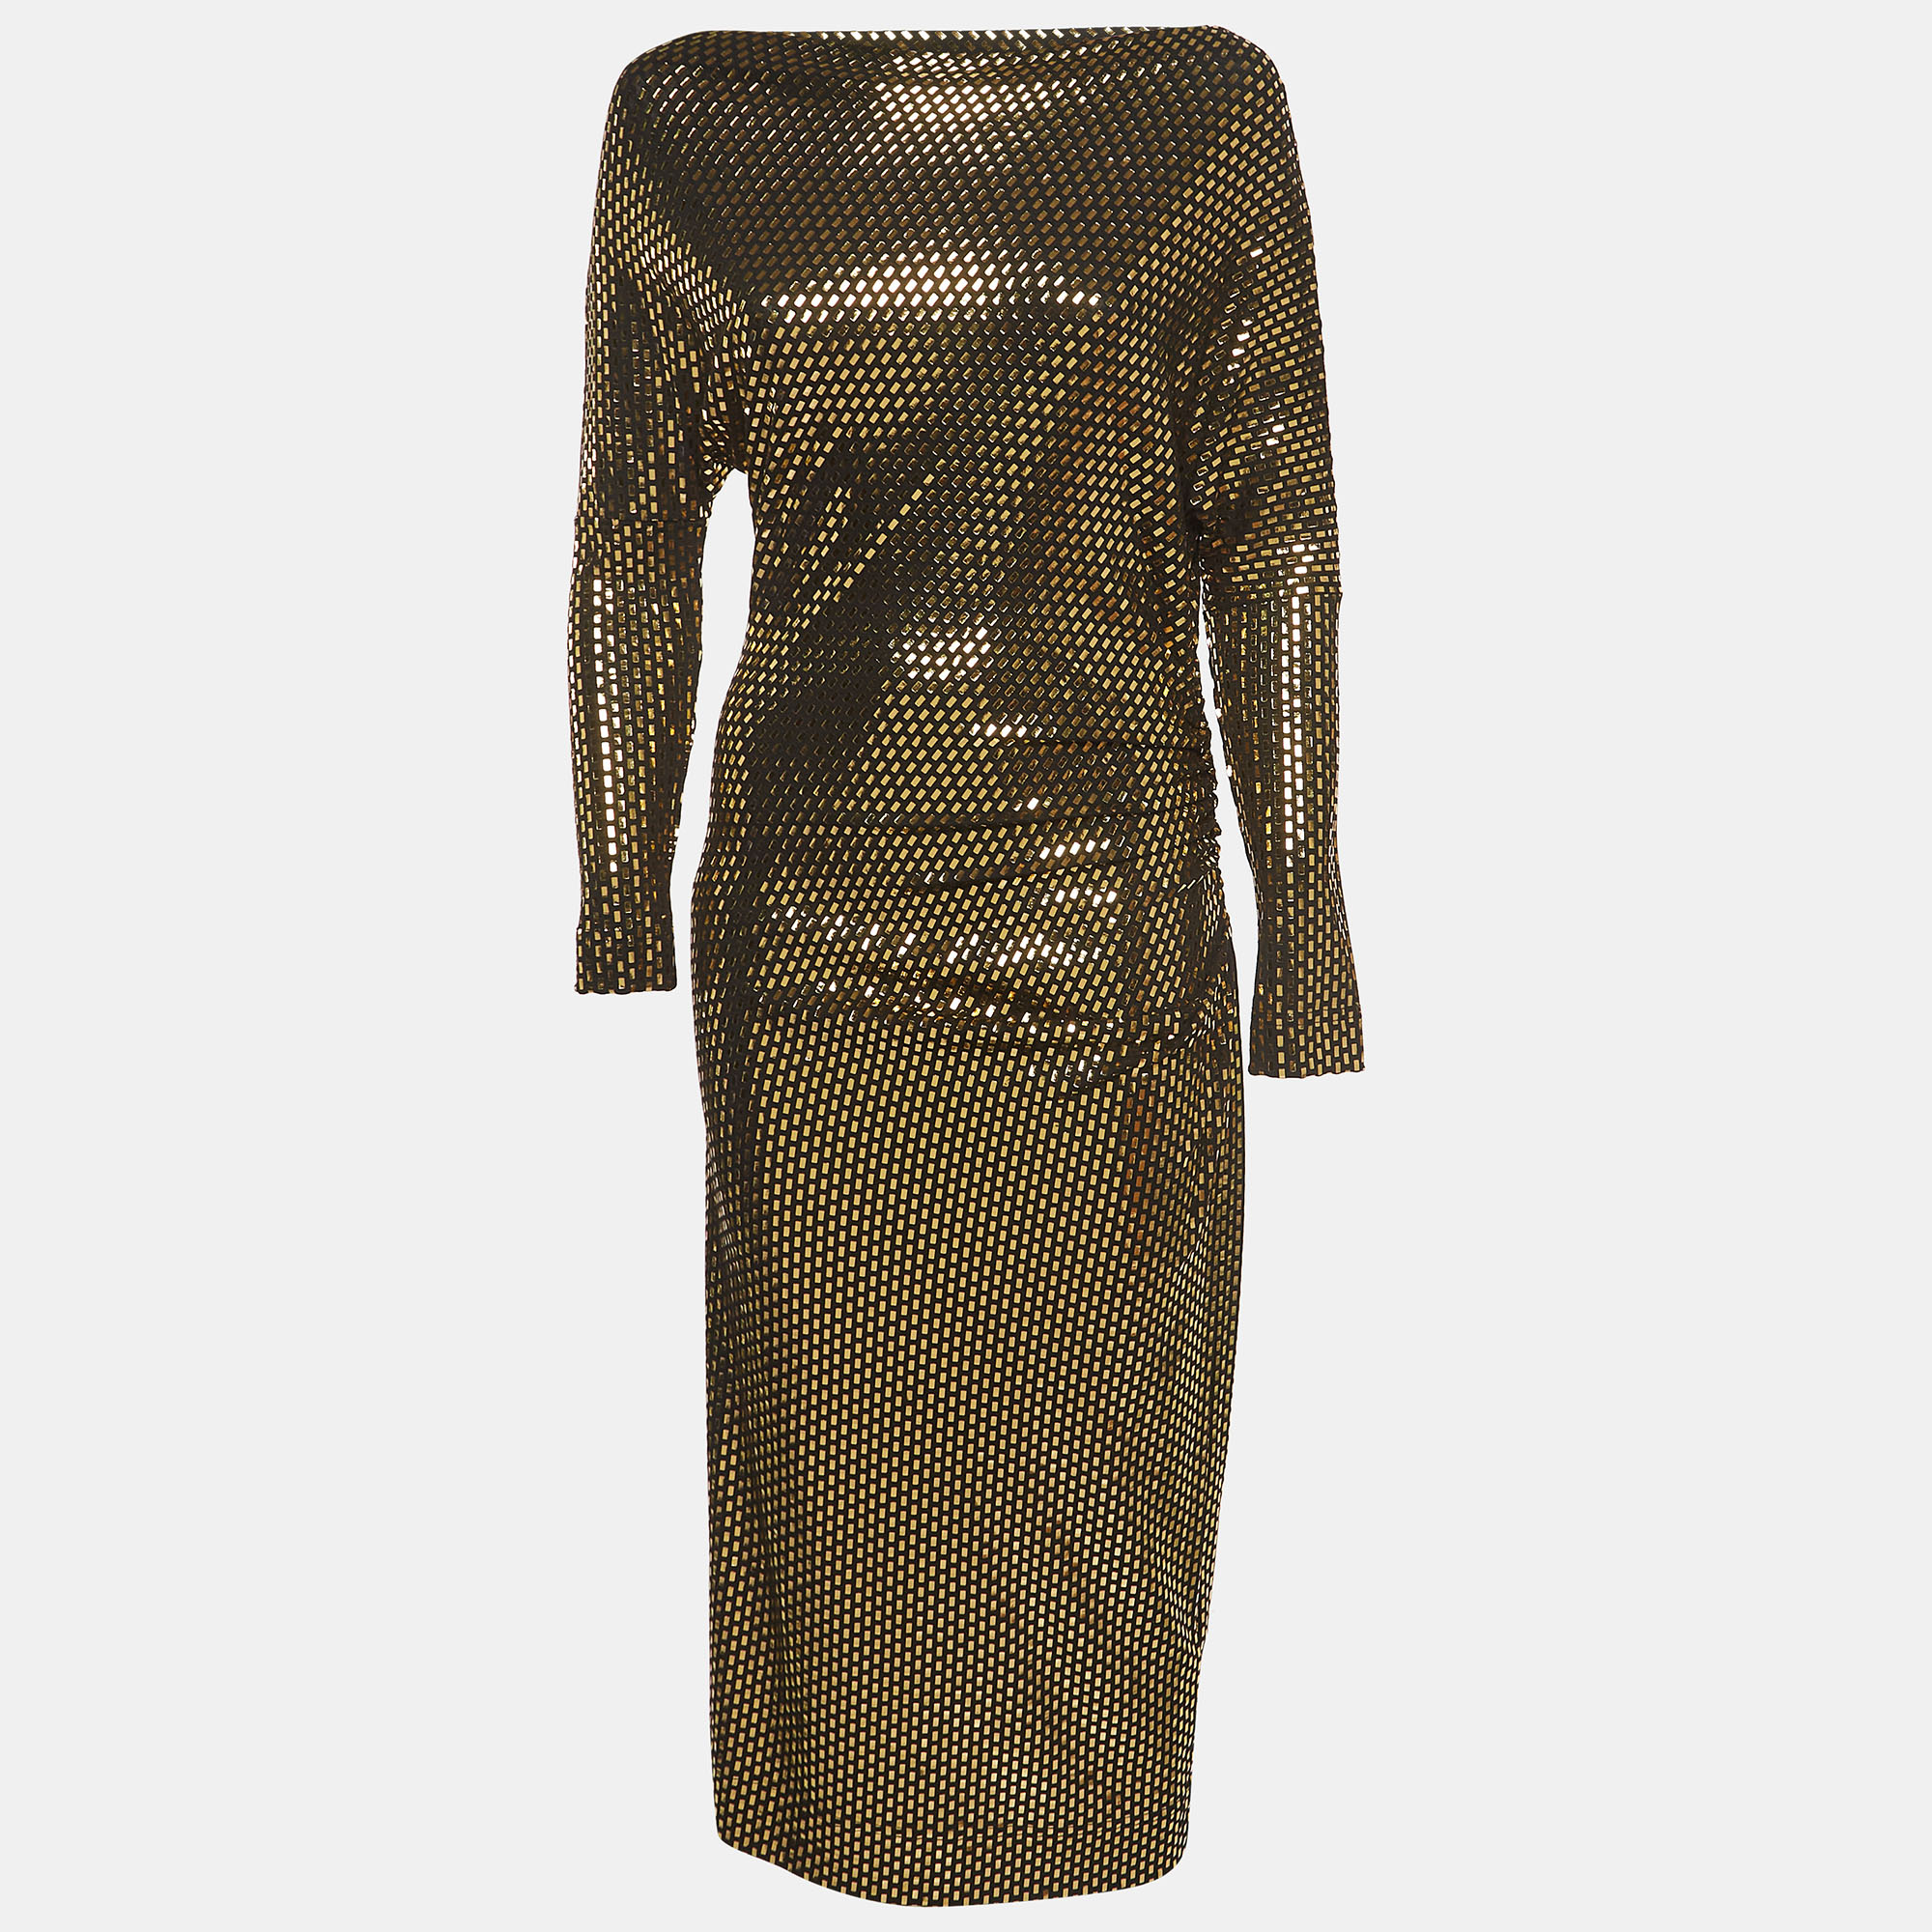 Vivienne Westwood Anglomania Black/Gold Jersey Midi Dress M